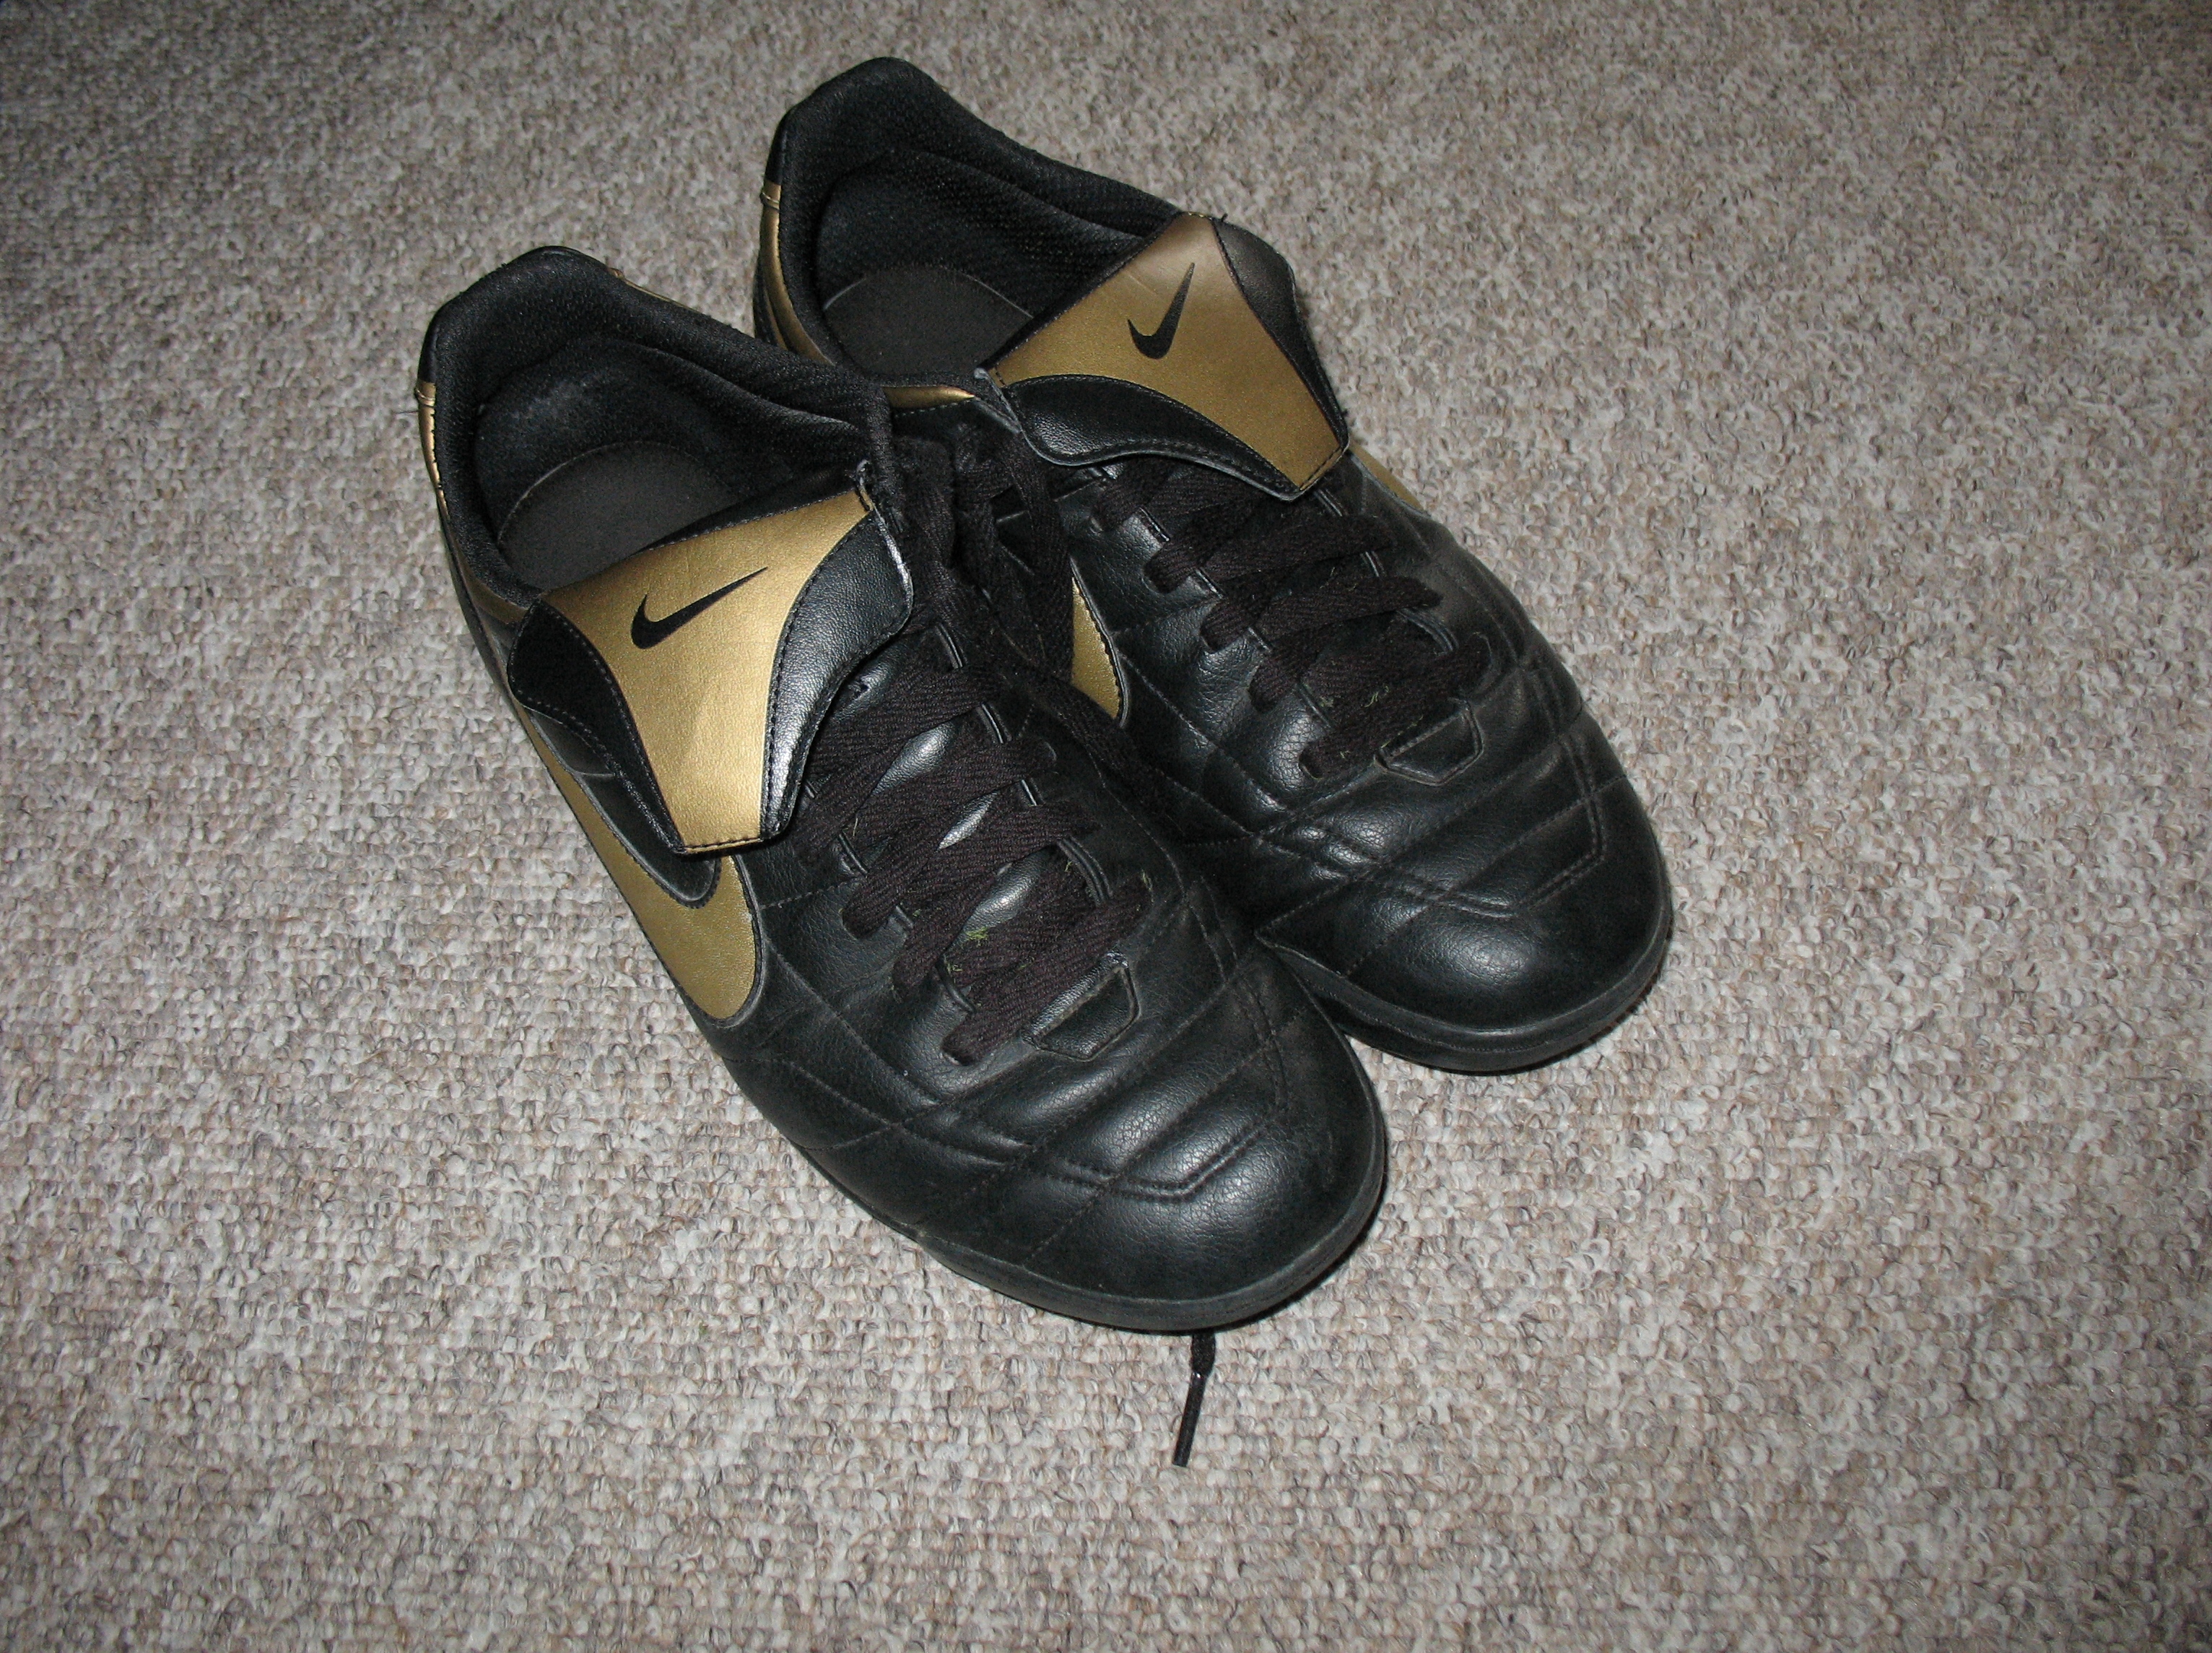 File:Nike Shoes.jpg - Wikimedia Commons